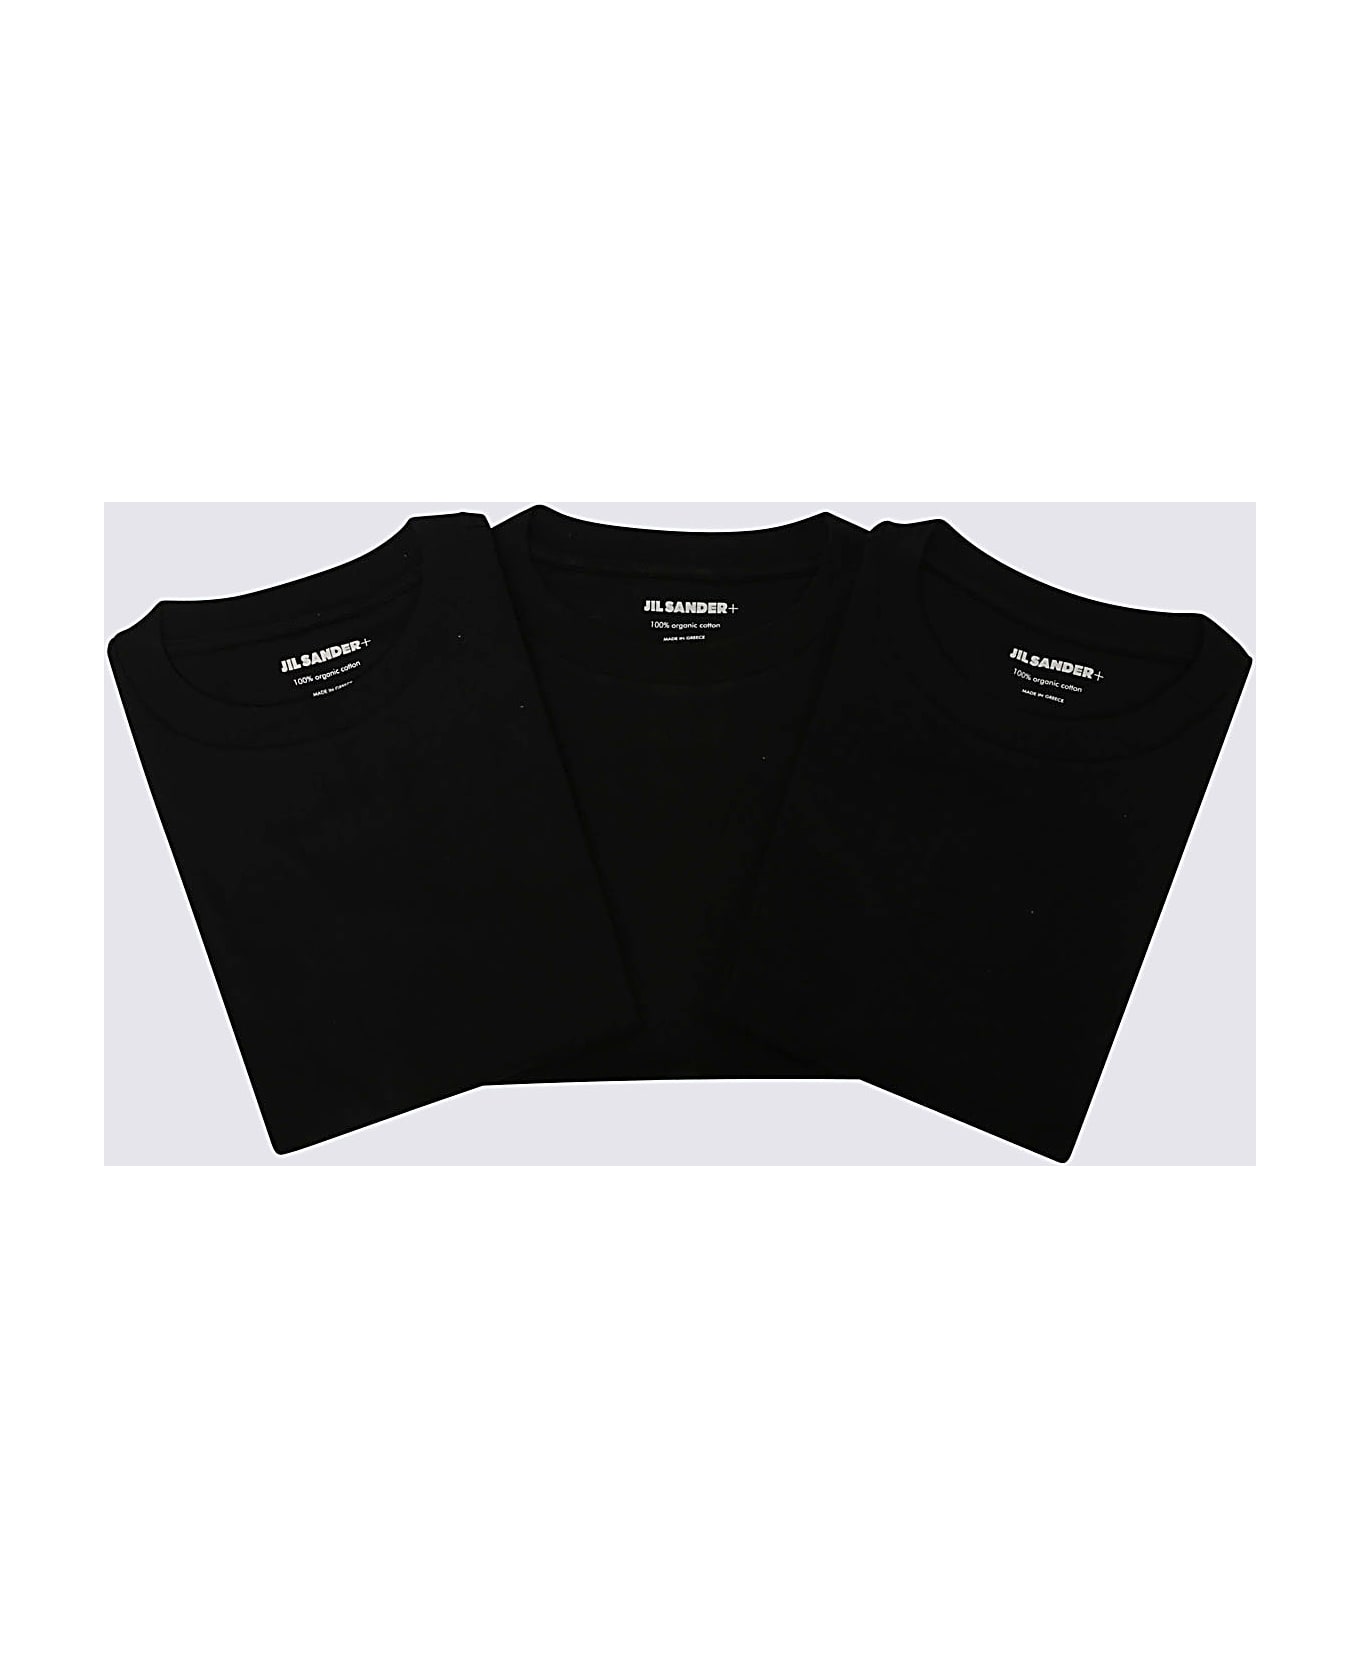 Jil Sander Black Cotton T-shirt 3-pack Set - BLACK/BLACK/BLACK